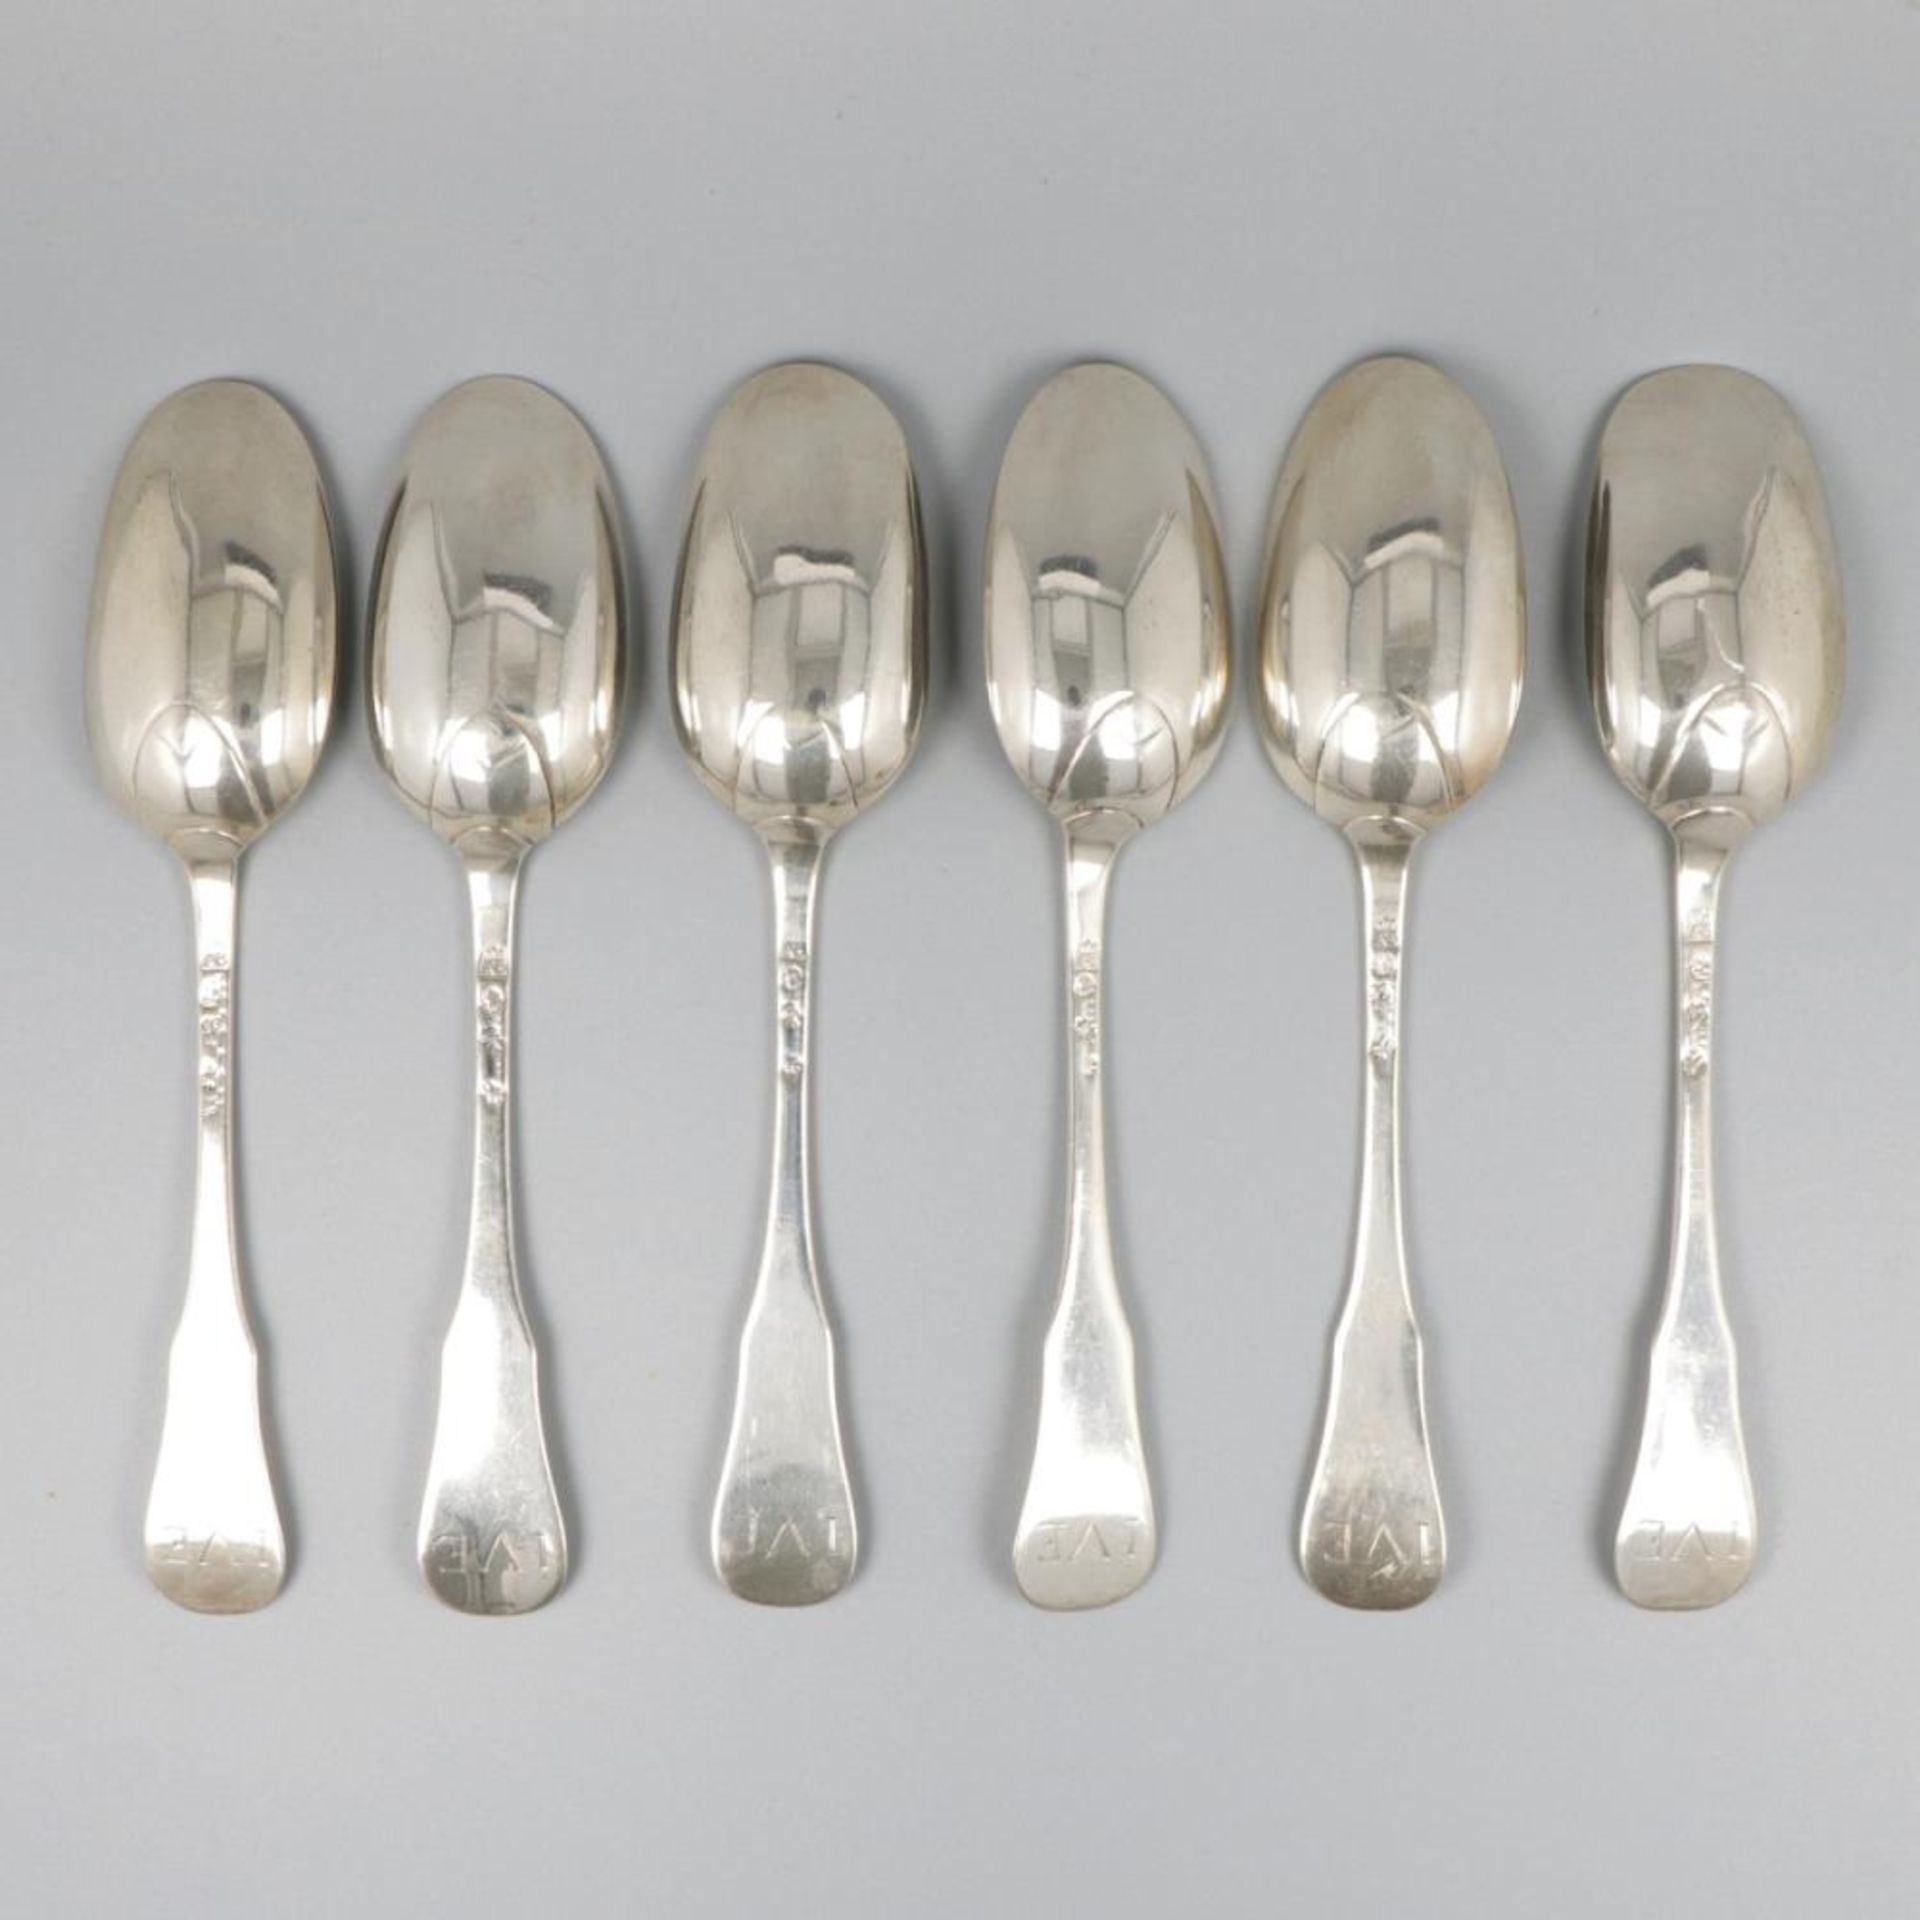 Set of 6 spoons (Bruges, Belgium, Adrianus Buschop 1756) silver. - Image 2 of 8